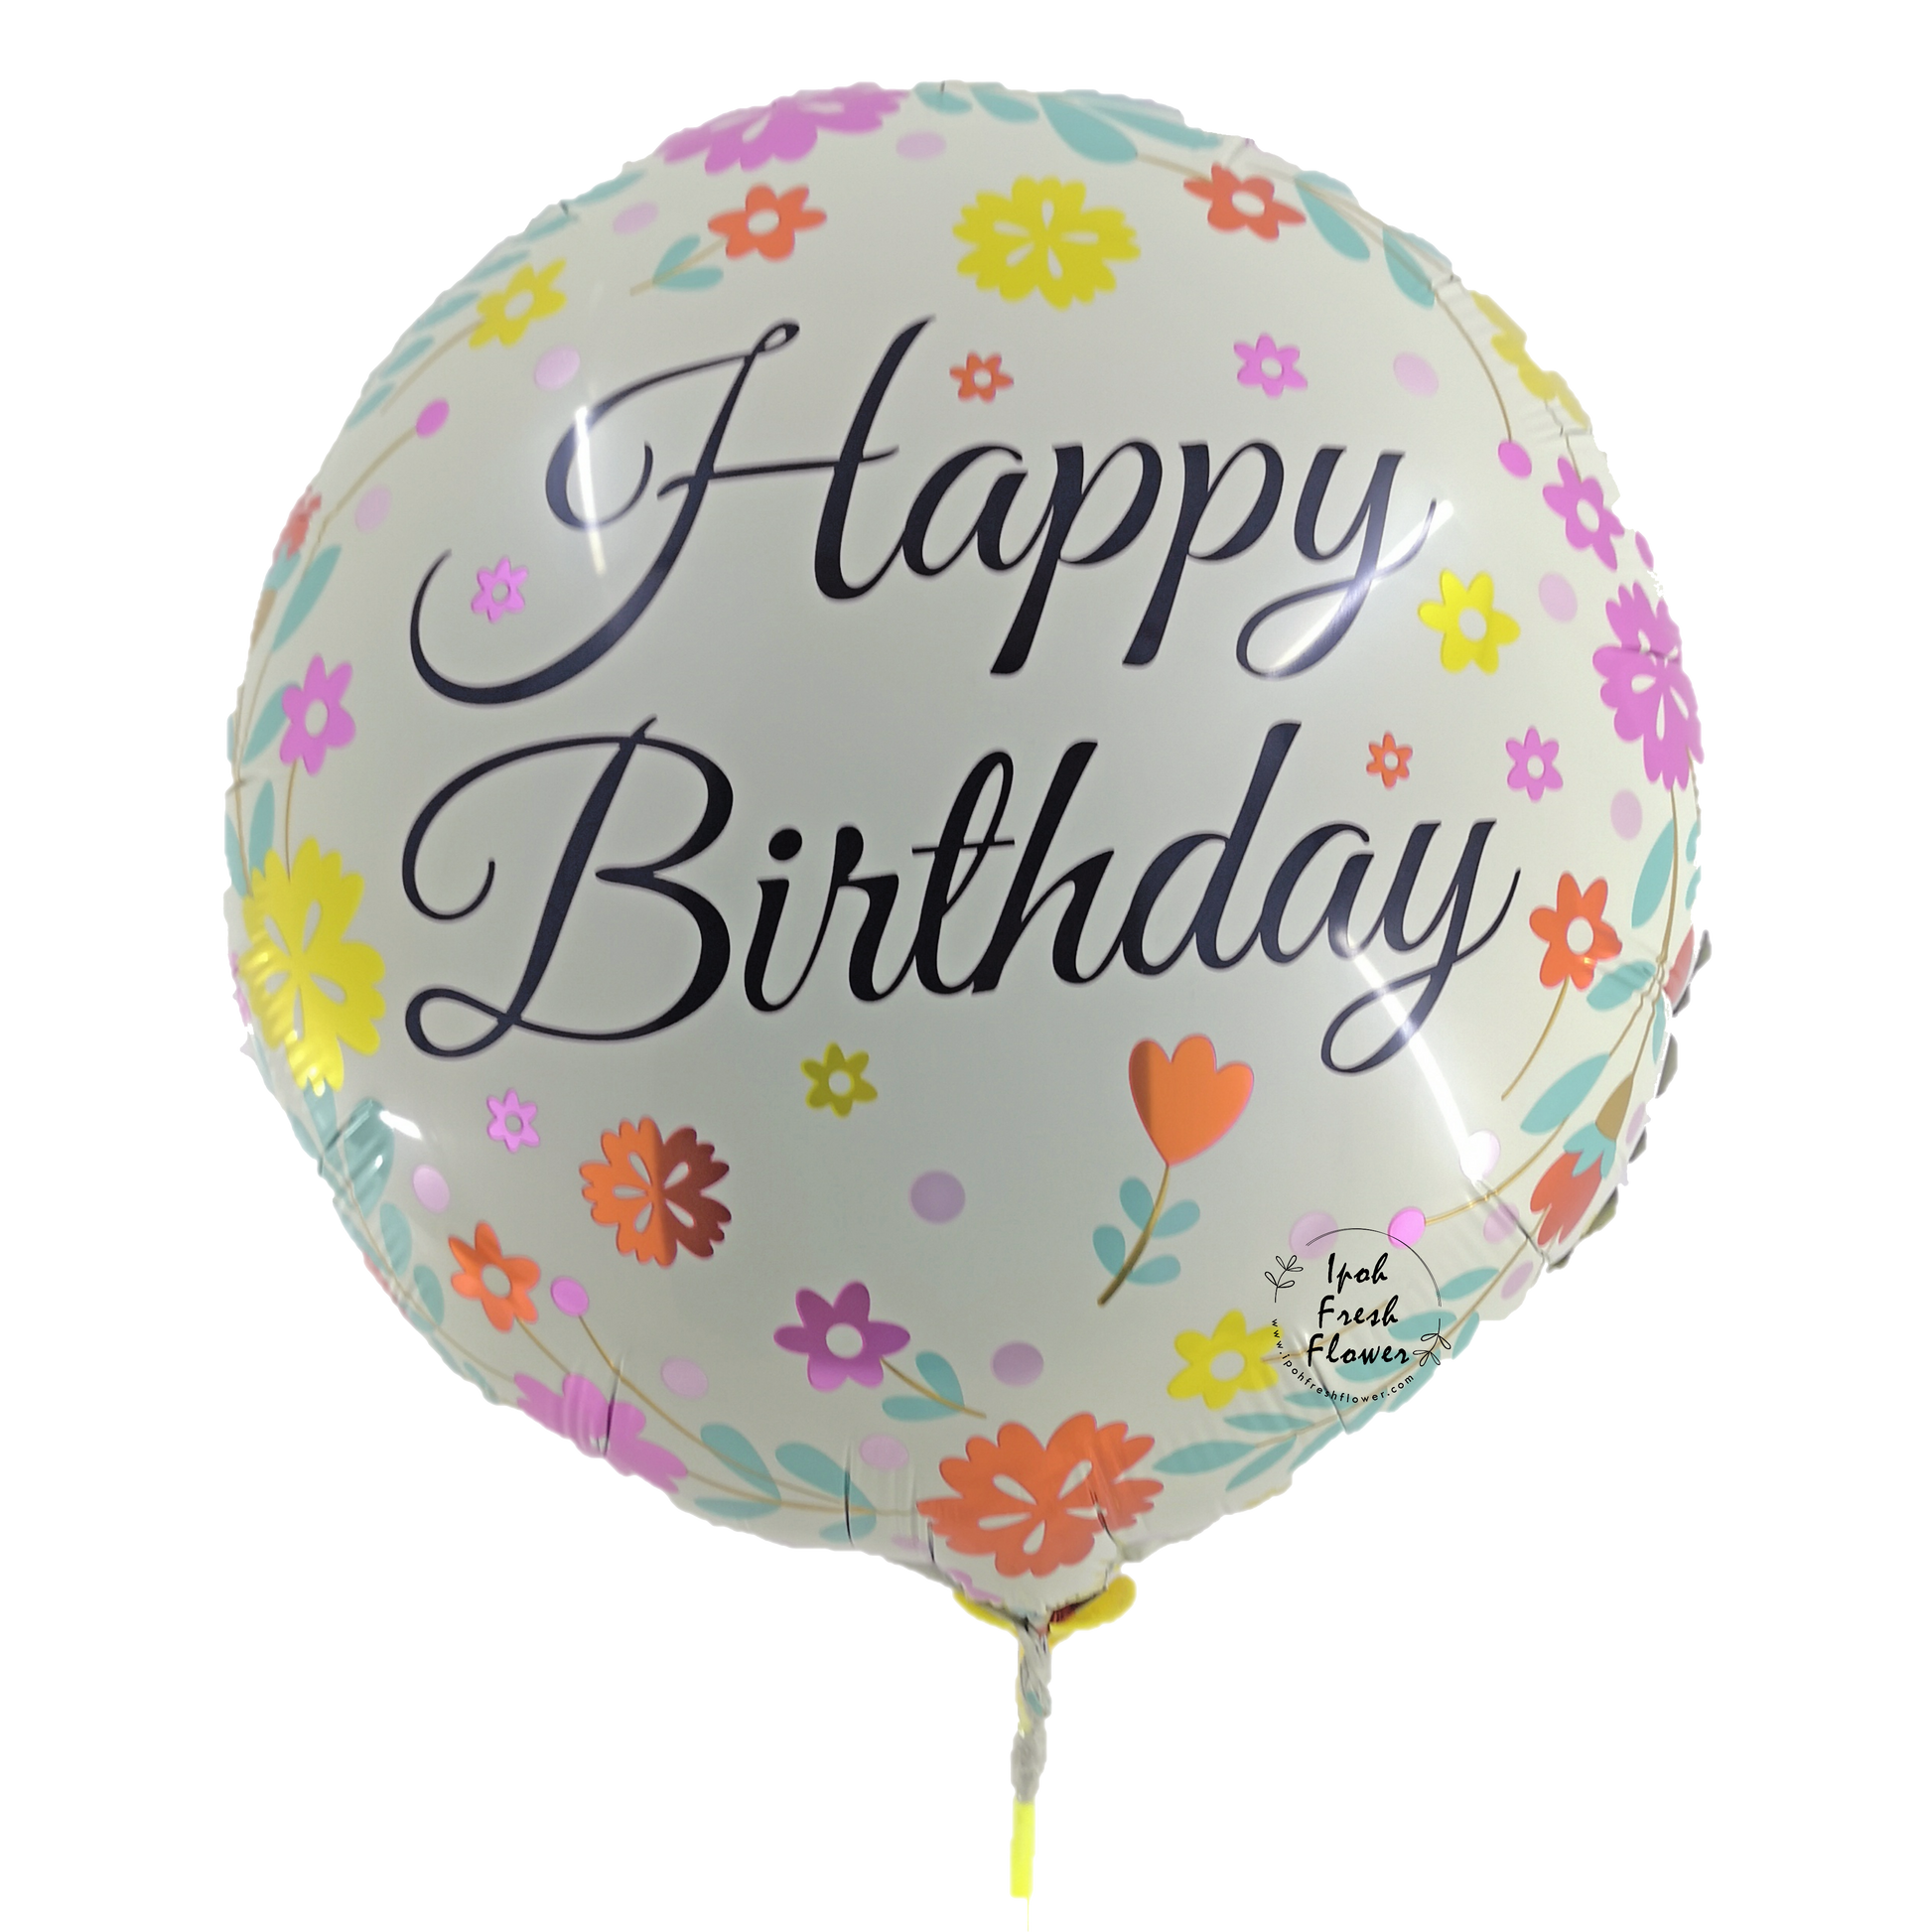 Happy Birthday Balloon| Add On| ipohfreshflower.com